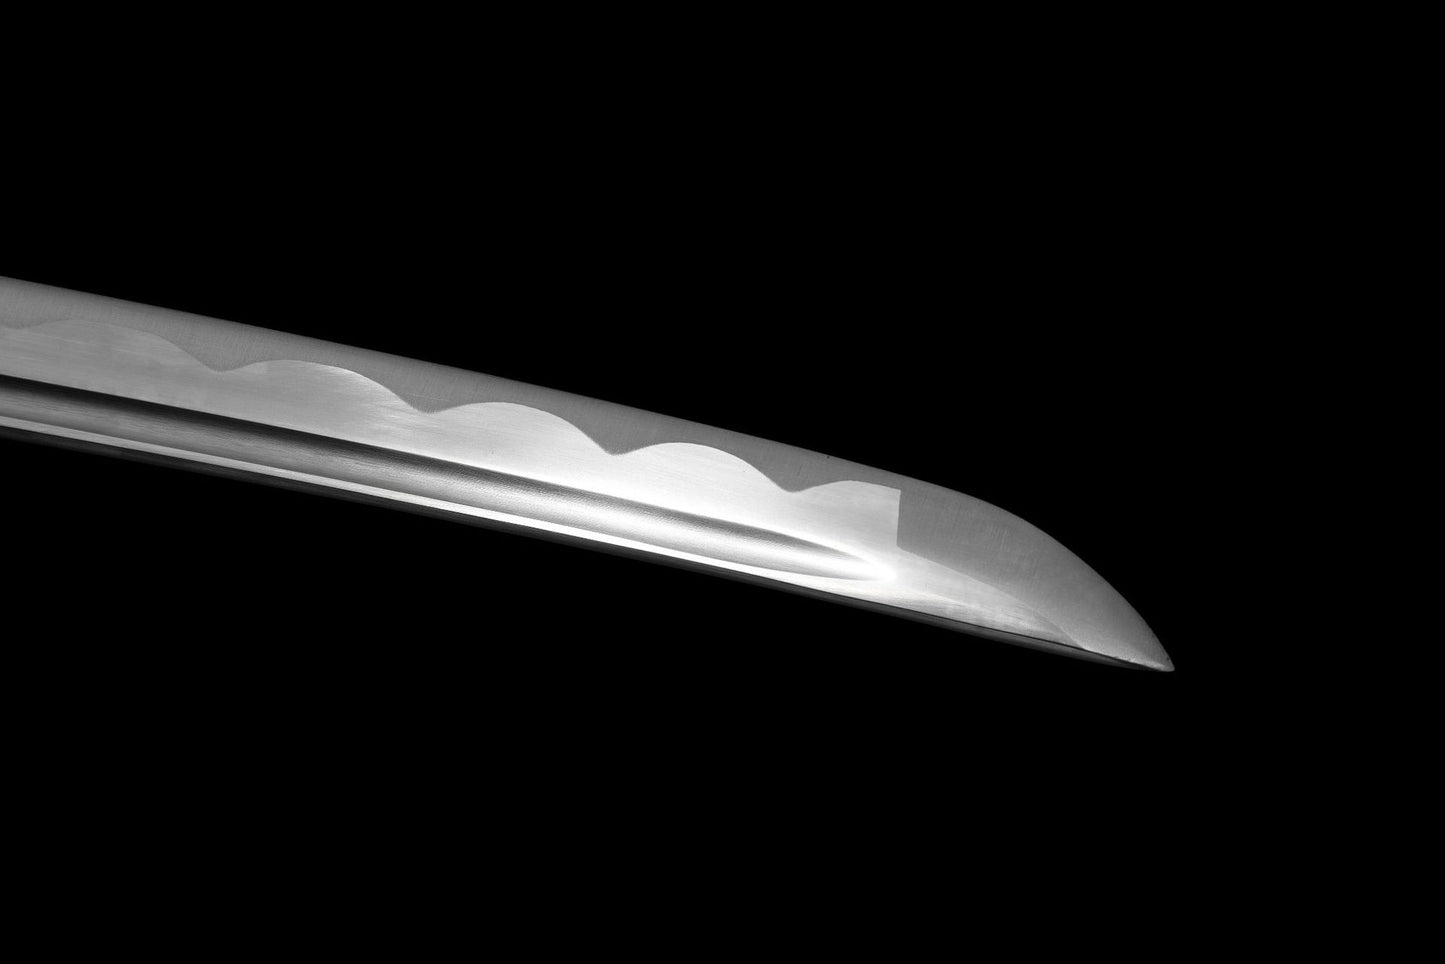 Carbon steel Samurai sword